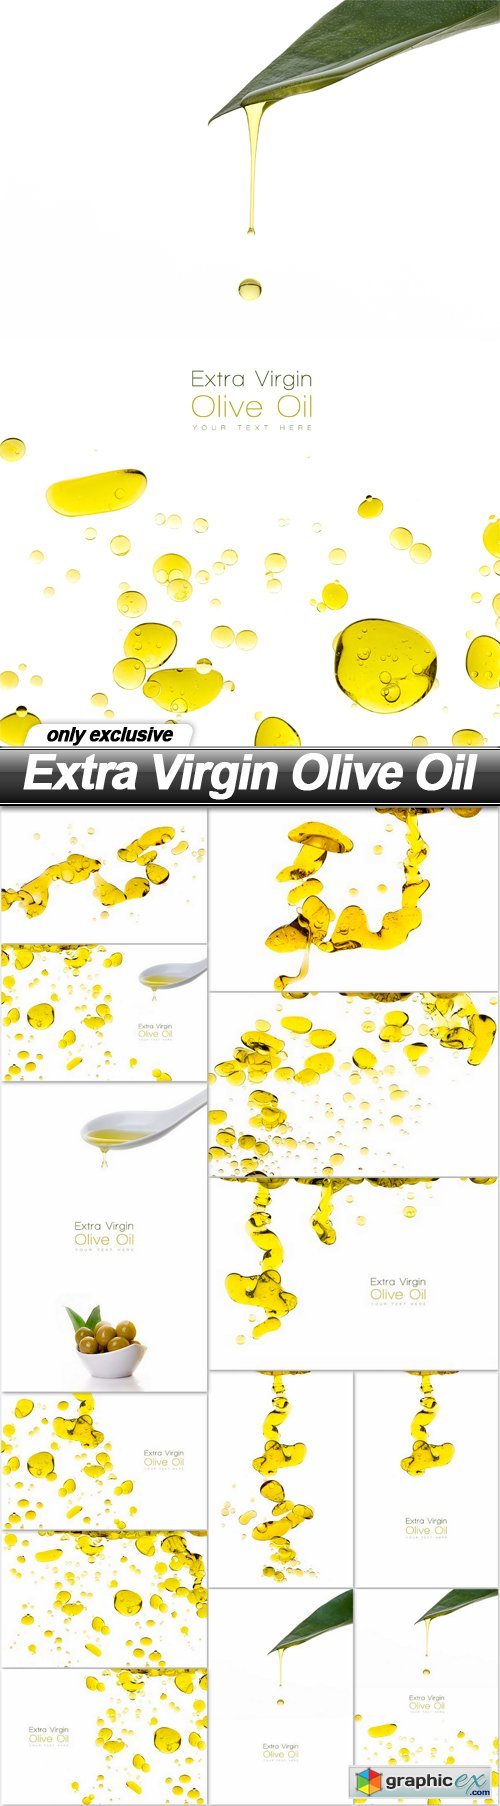 Extra Virgin Olive Oil - 13 UHQ JPEG